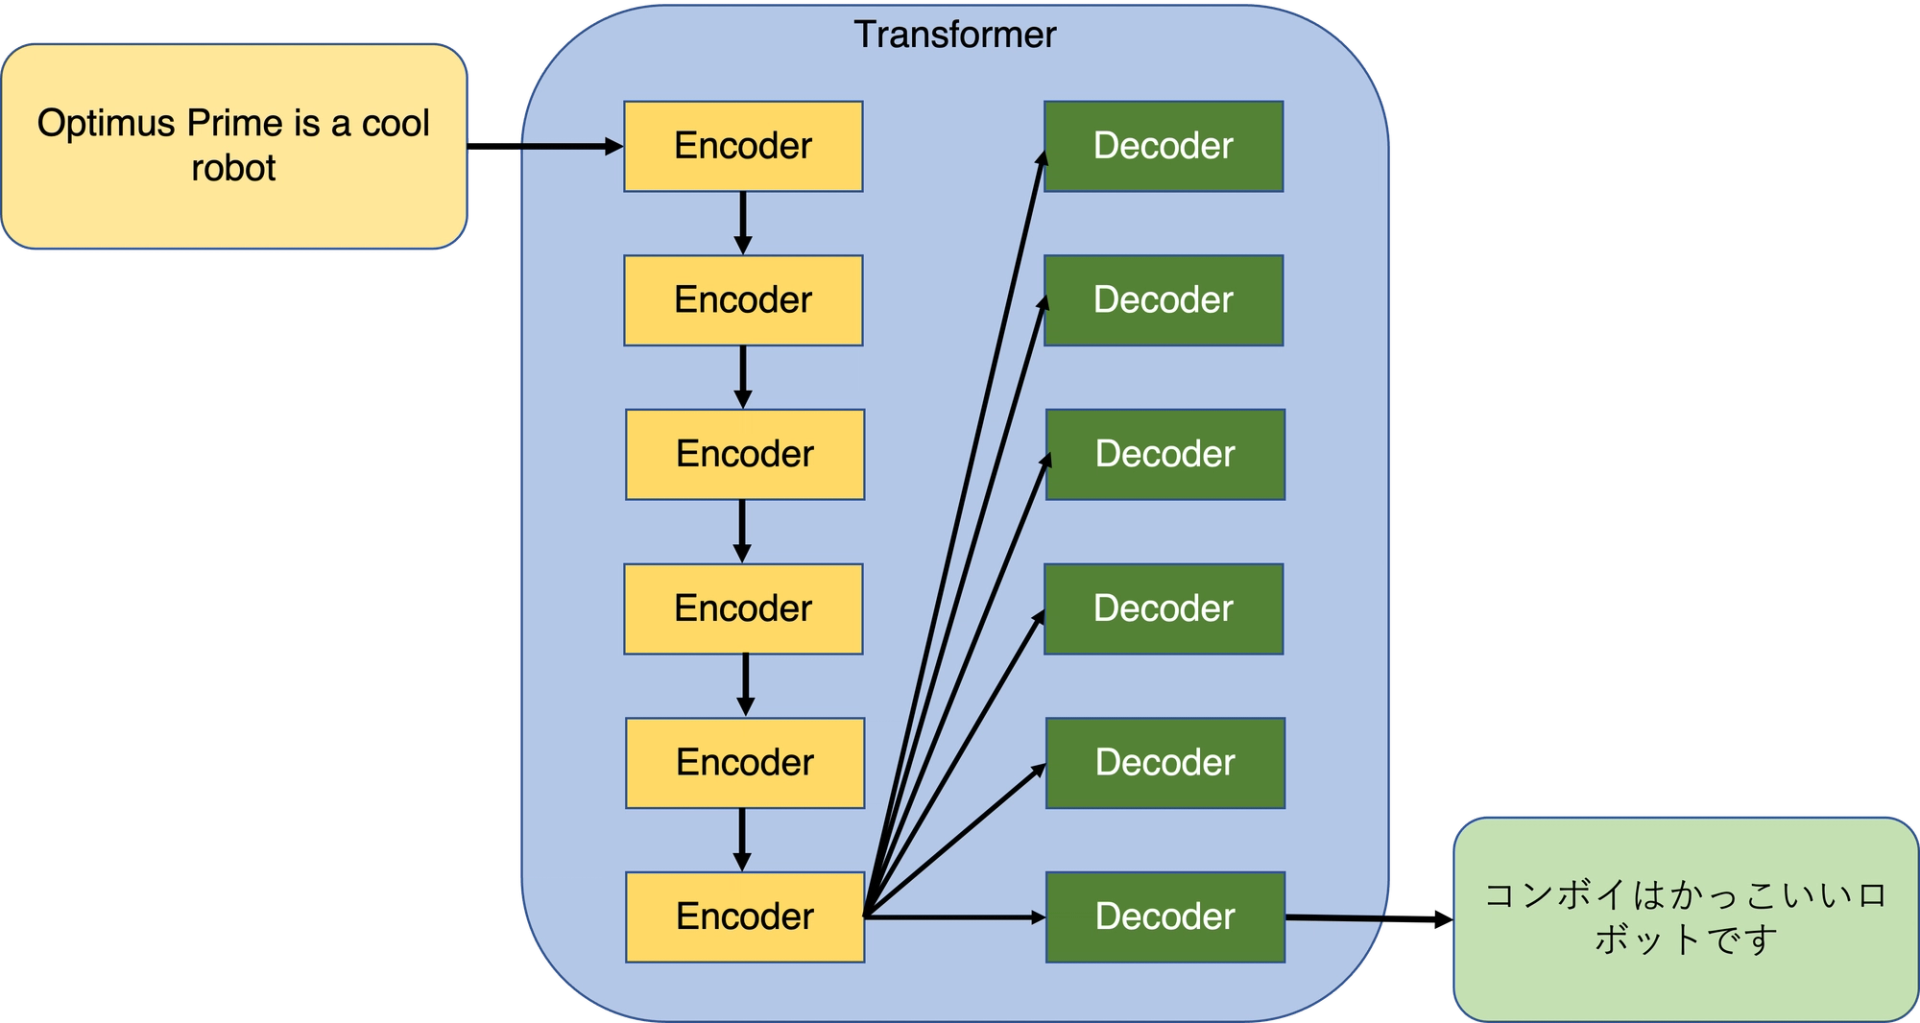 Series of encoders and decoders in a transformer model